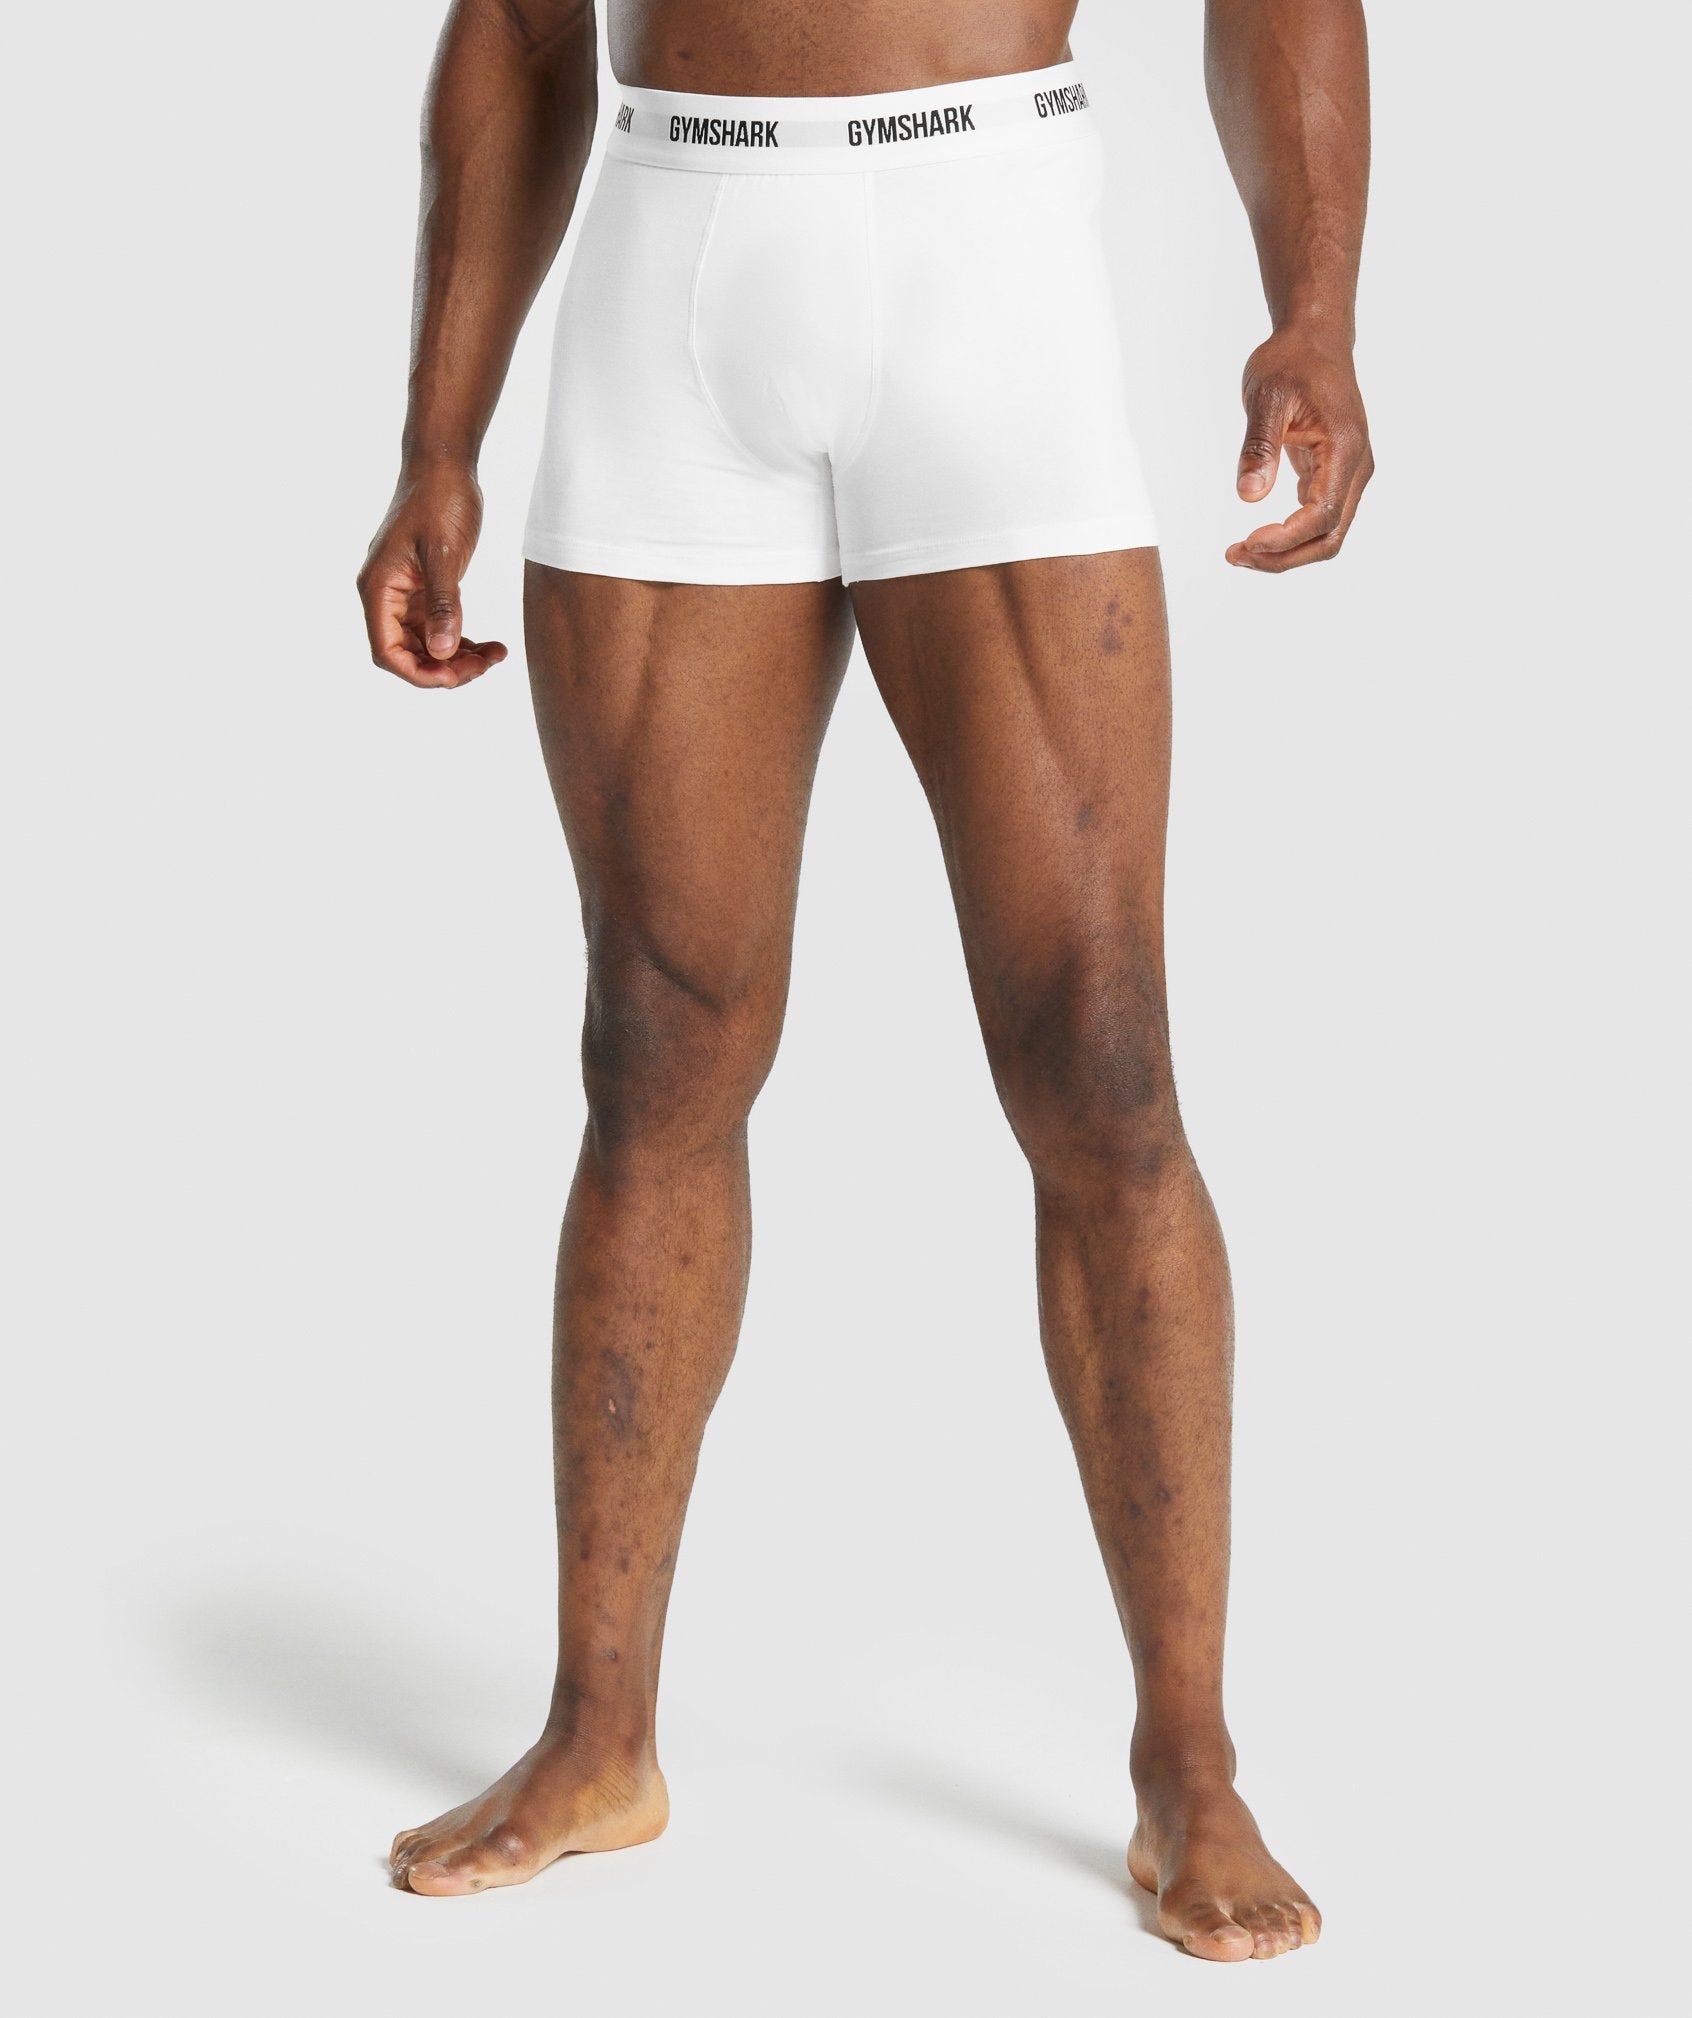 Gymshark Men's Essential Mid-Length Boxers 3 Pack, Green / Navy